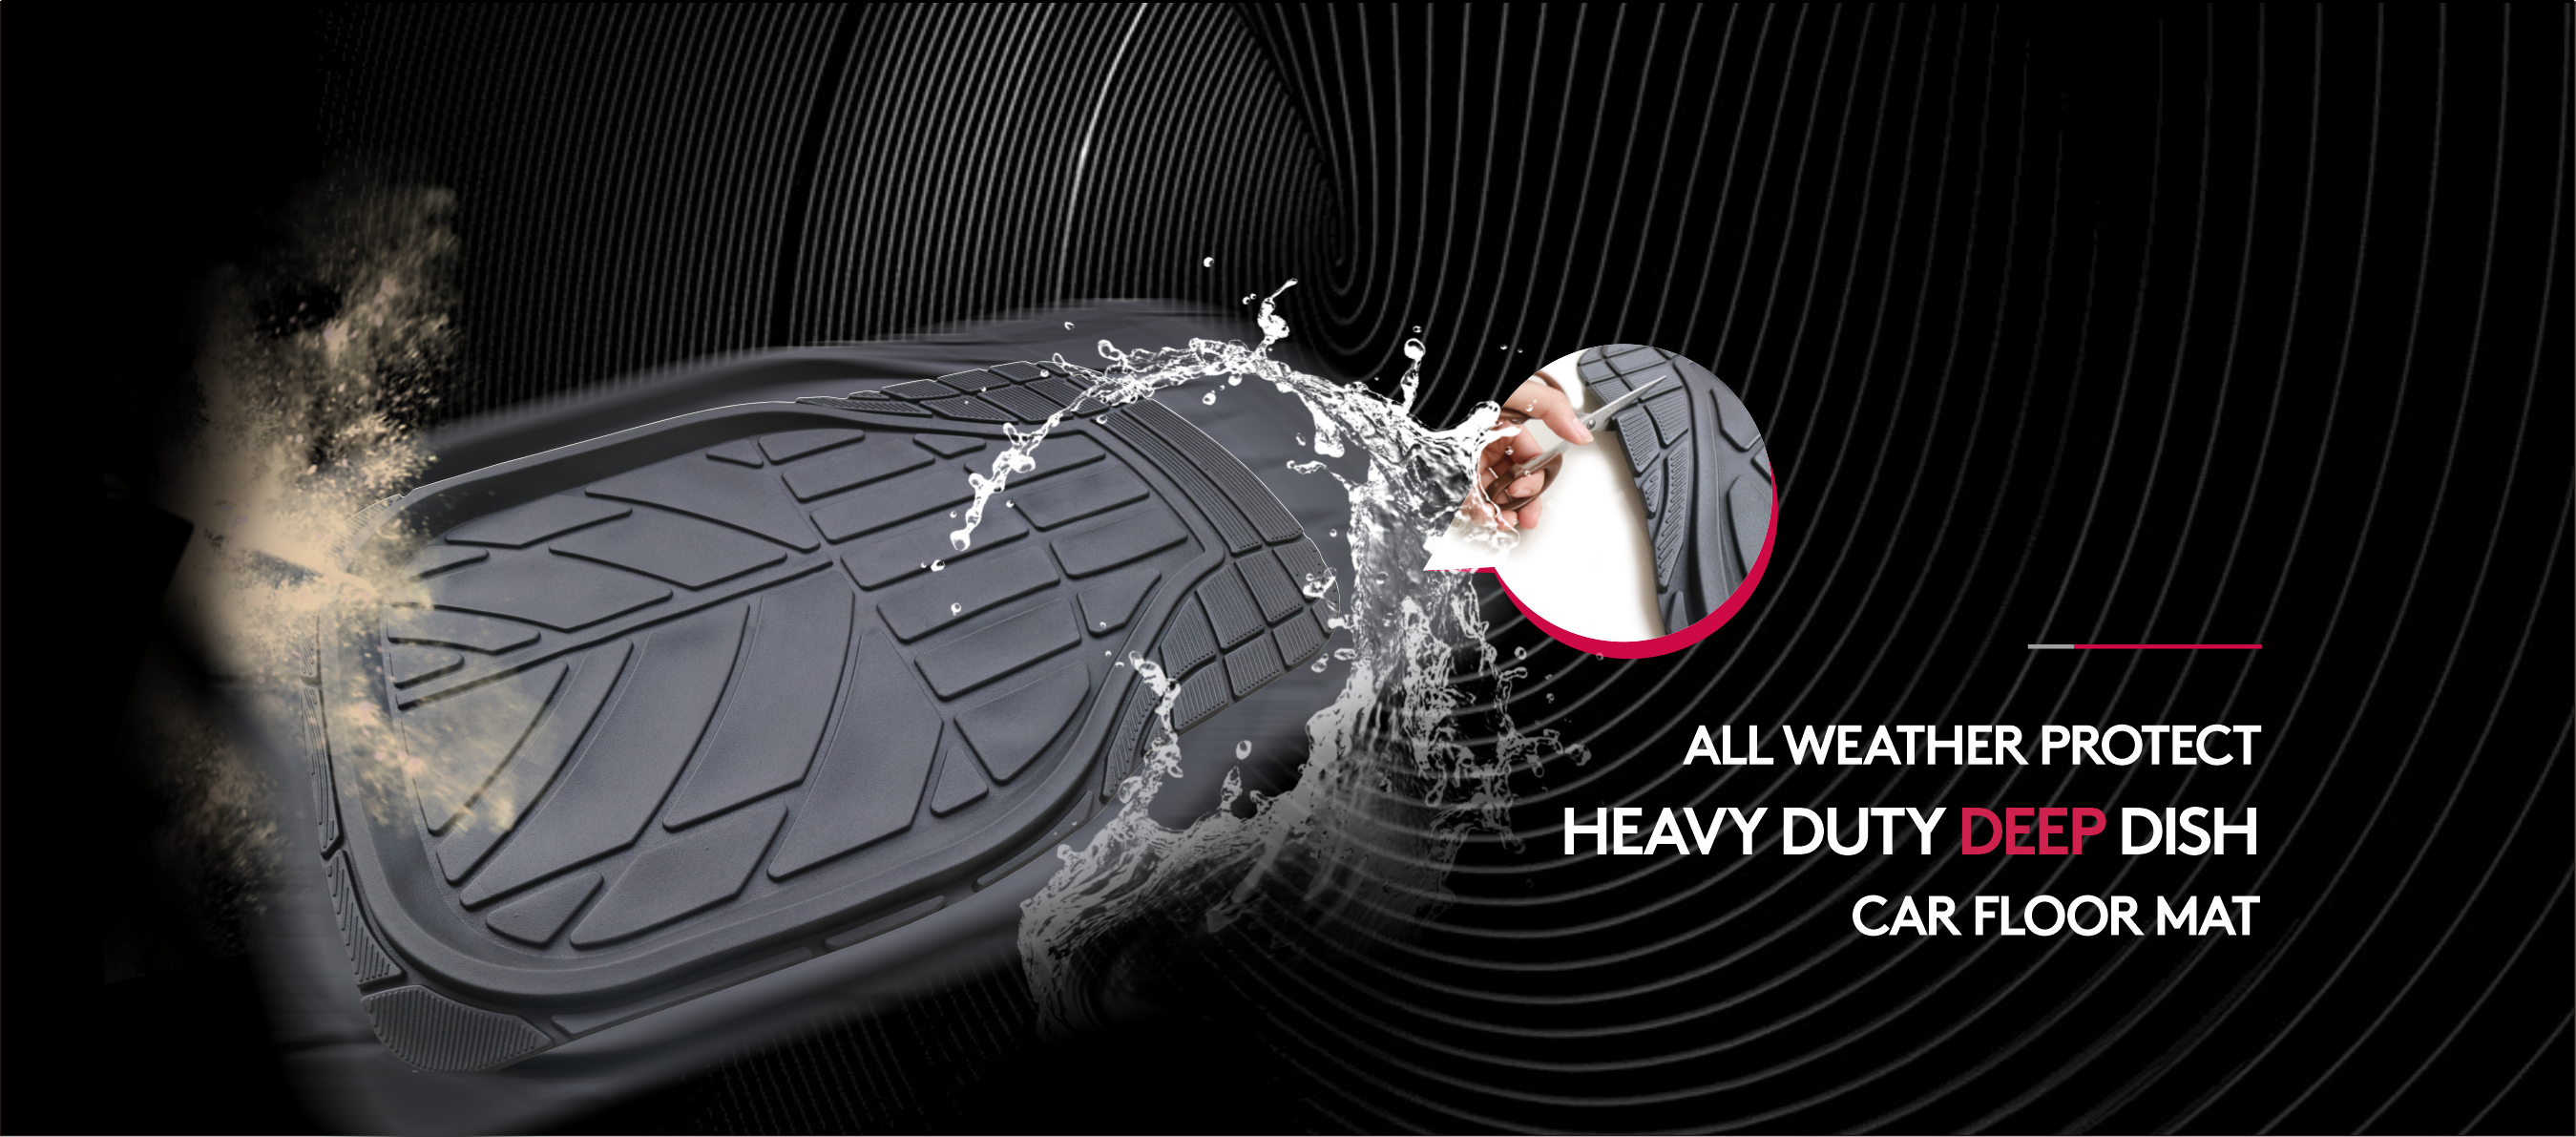 Motor Trend FlexTough Car Floor Mats Contour Liners - Heavy Duty Deep Dish  Rubber Mats for Car & SUV, (Odorless)